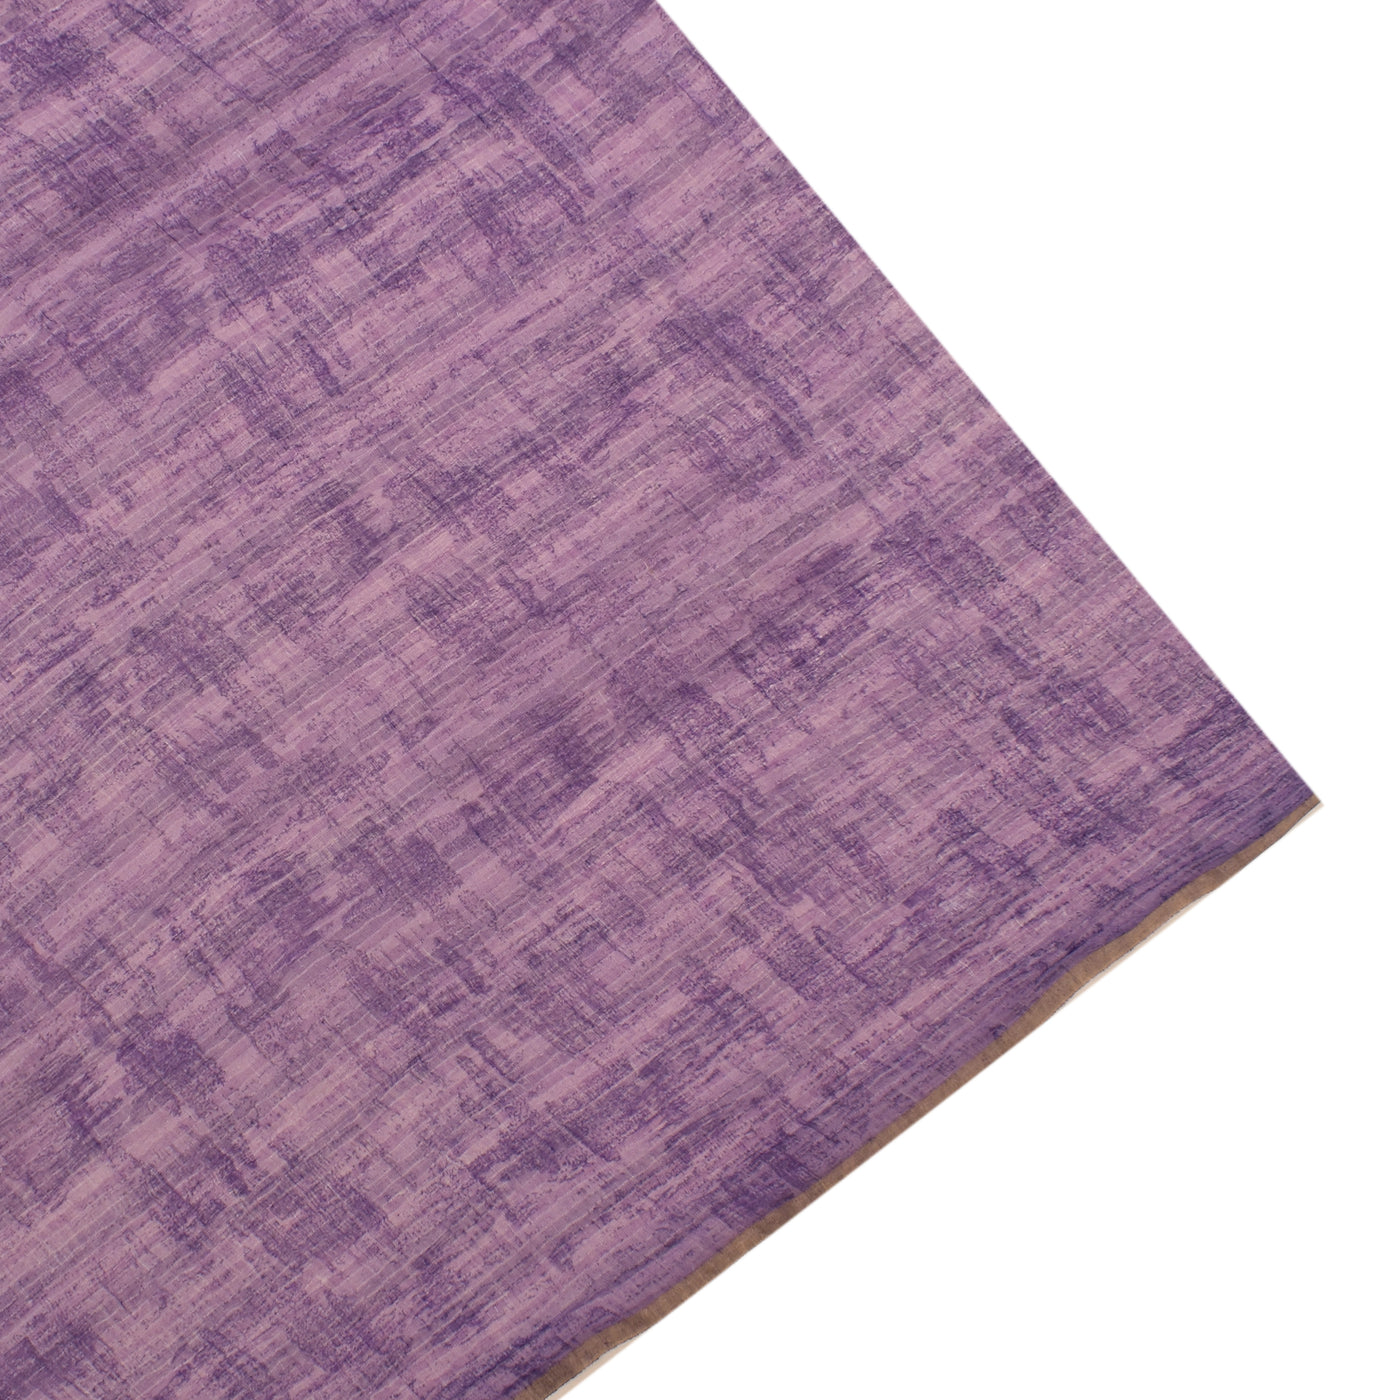 Lavender Linen Saree with Stripes Design